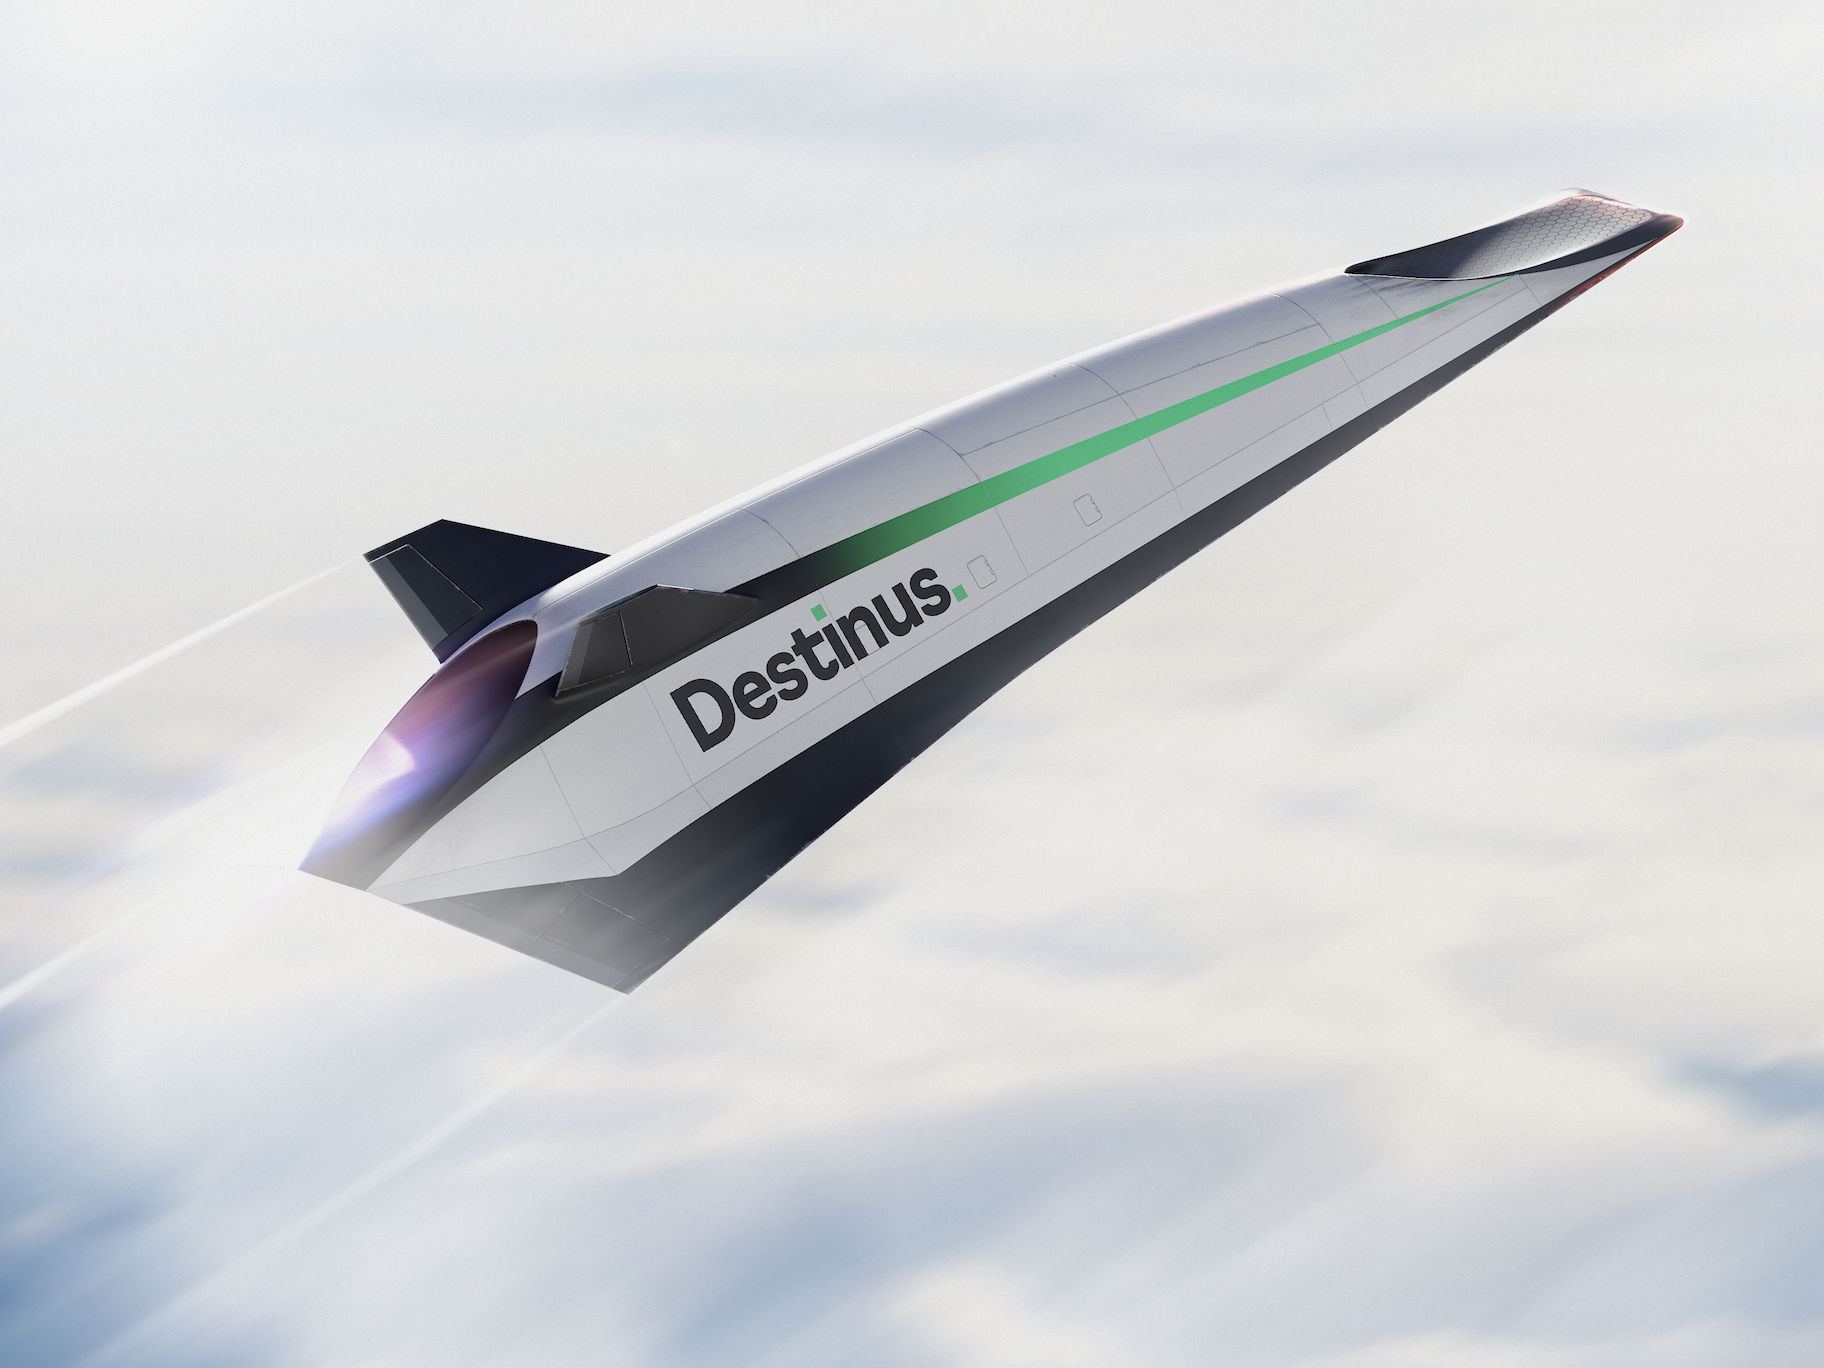 Destinus L plane climbing at hypersonic speed.